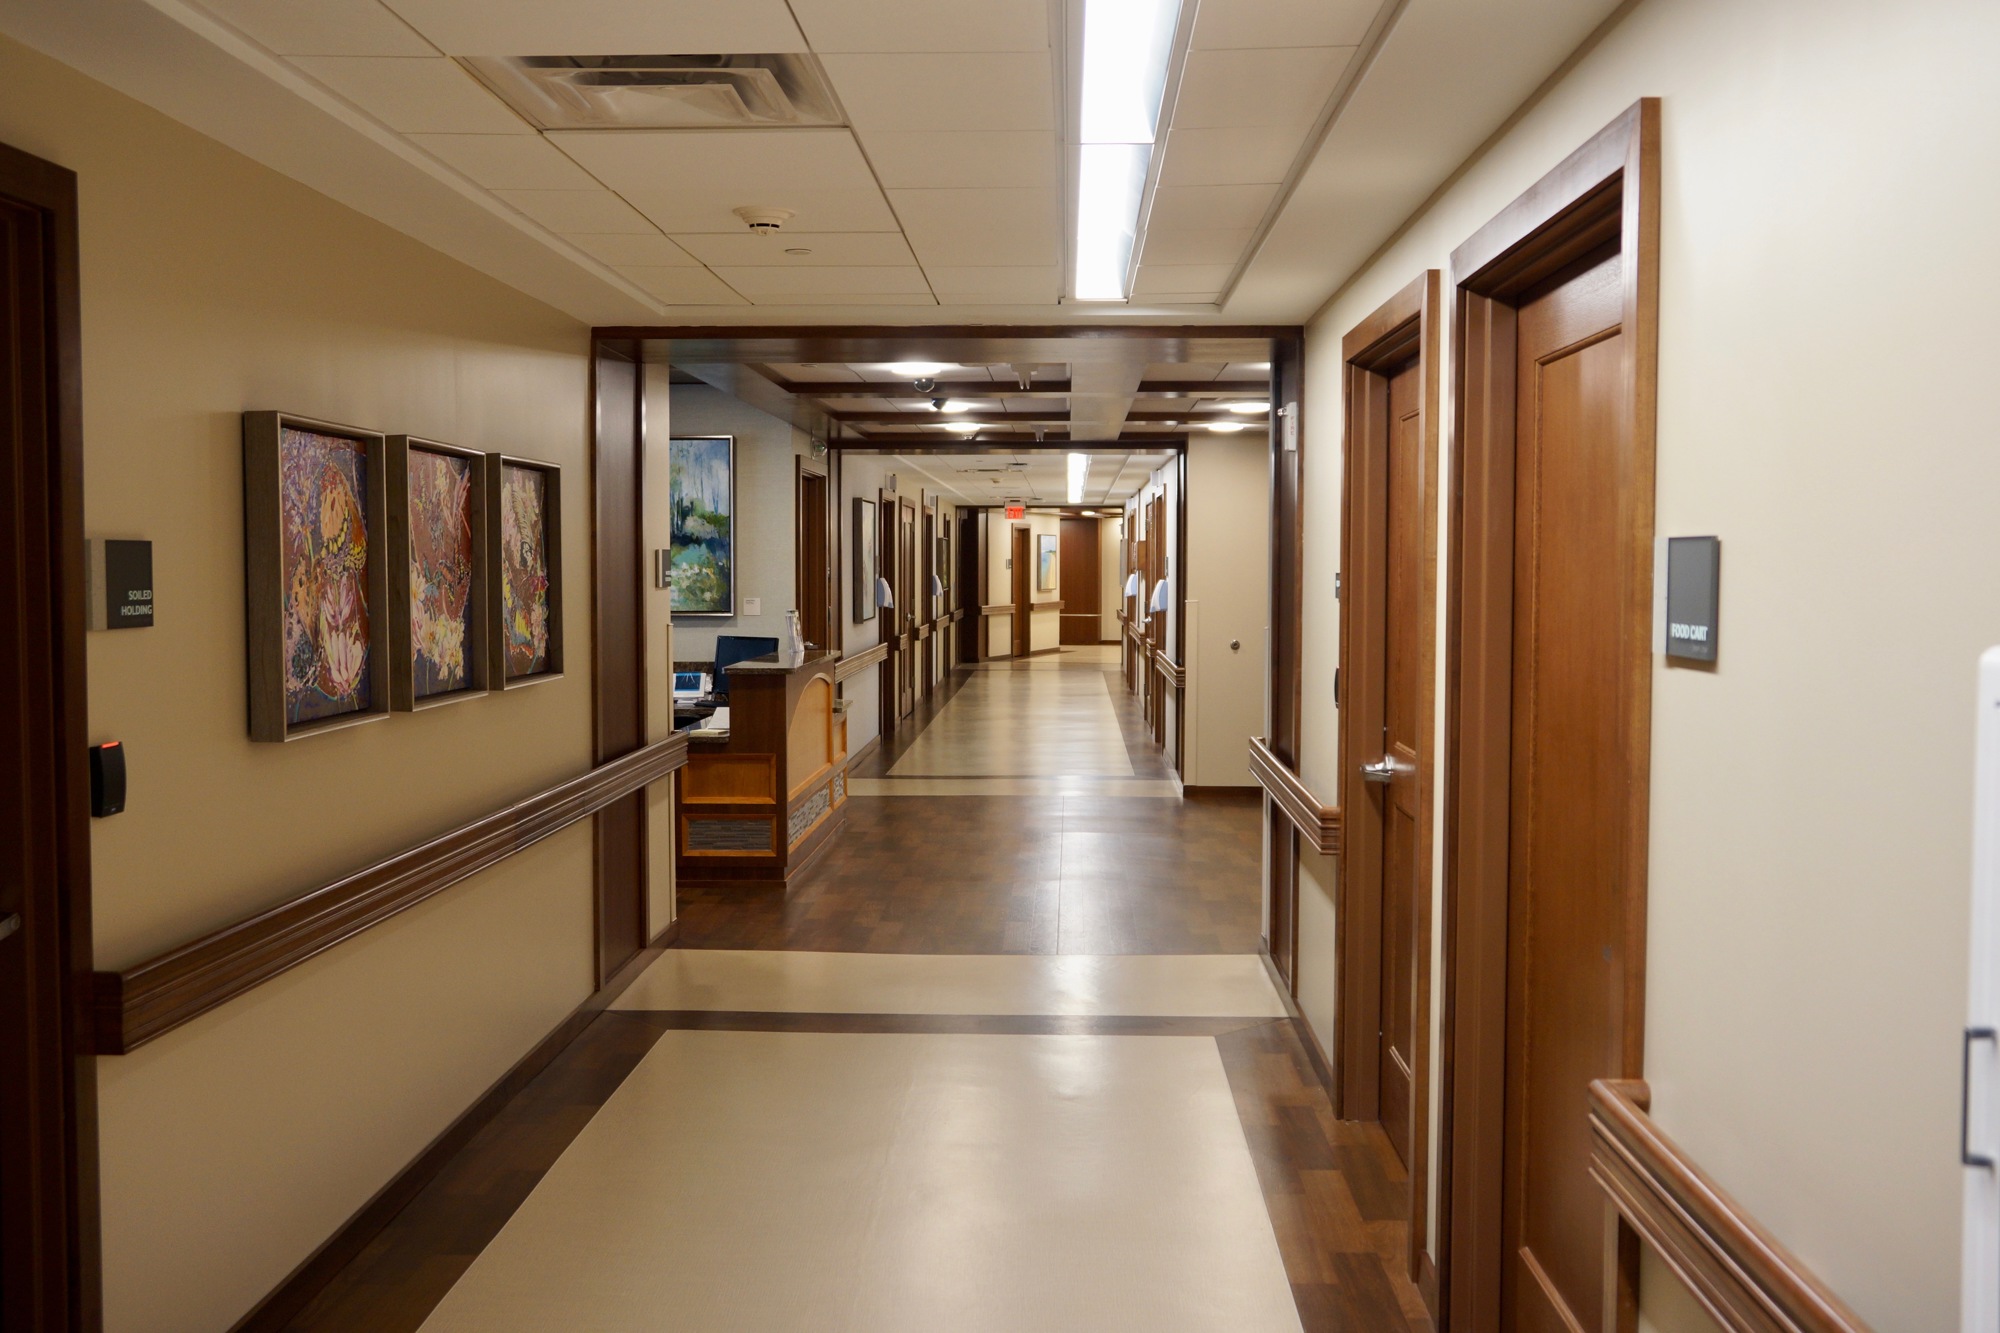 A hallway at the facility.